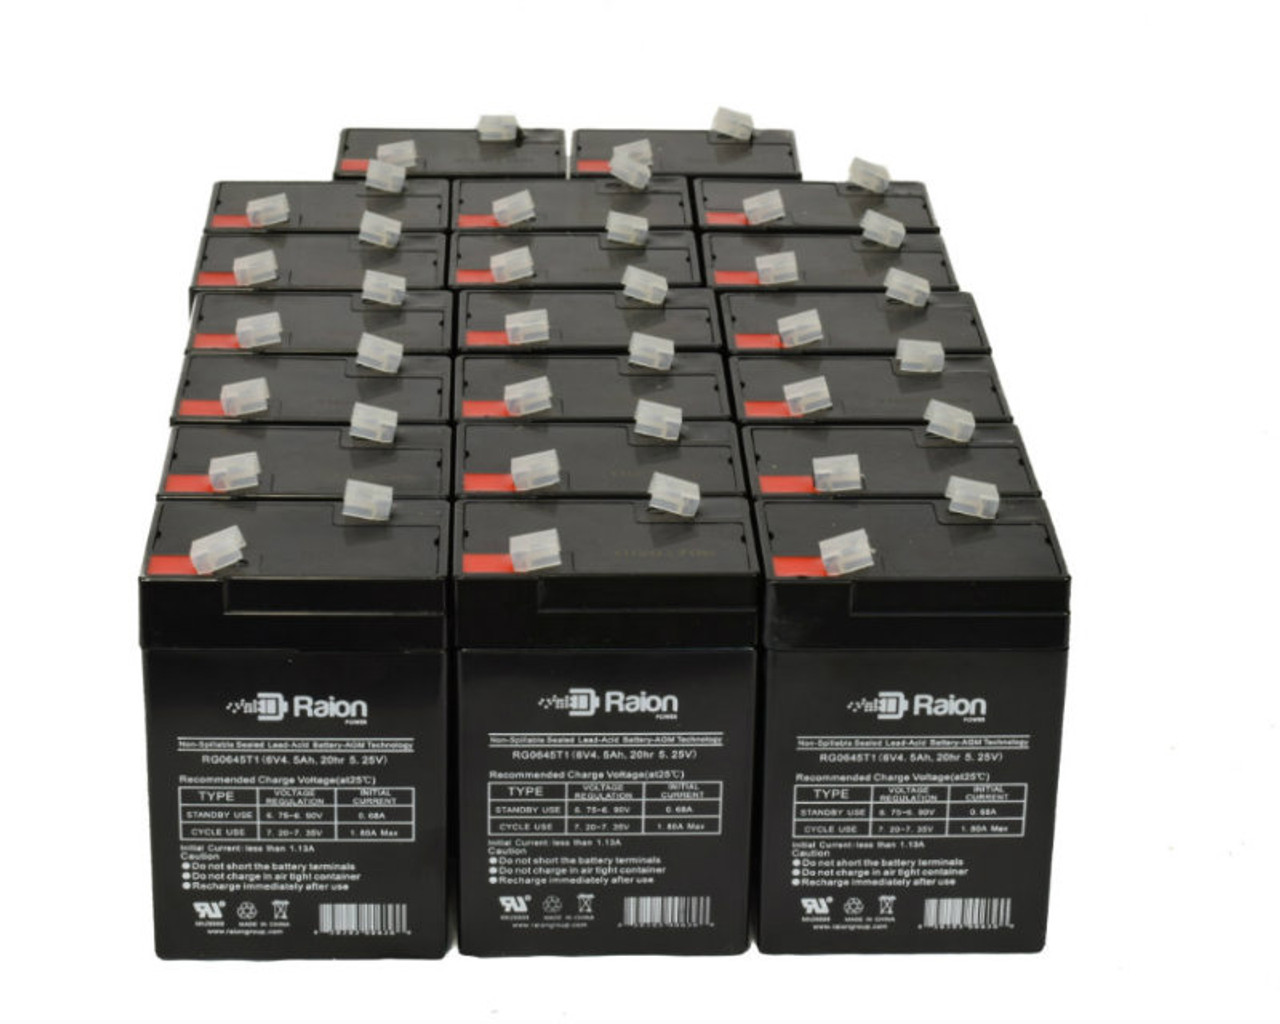 Raion Power 6V 4.5Ah Replacement Emergency Light Battery for Elan 1661B - 20 Pack